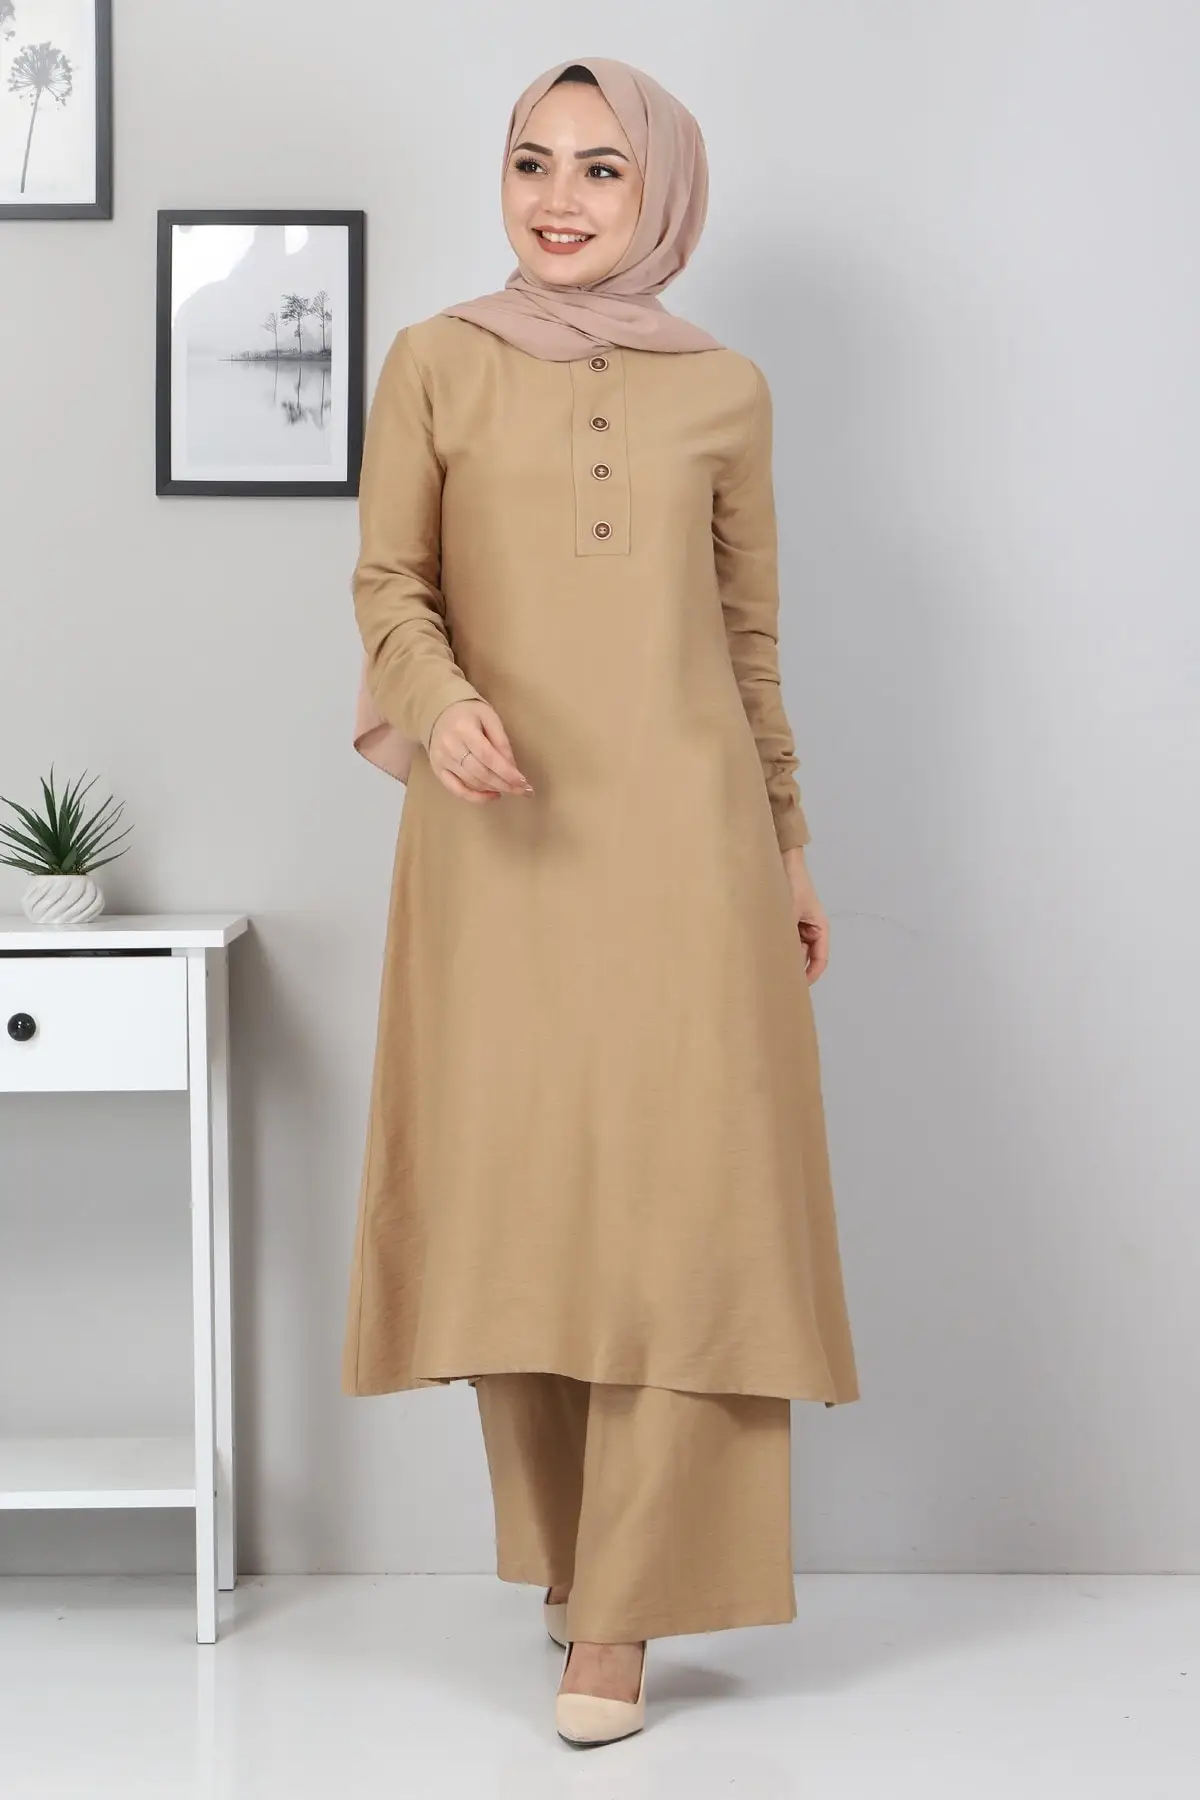 Button Hijab Kombin Tan Brown Bottom-Top Suits Clothing